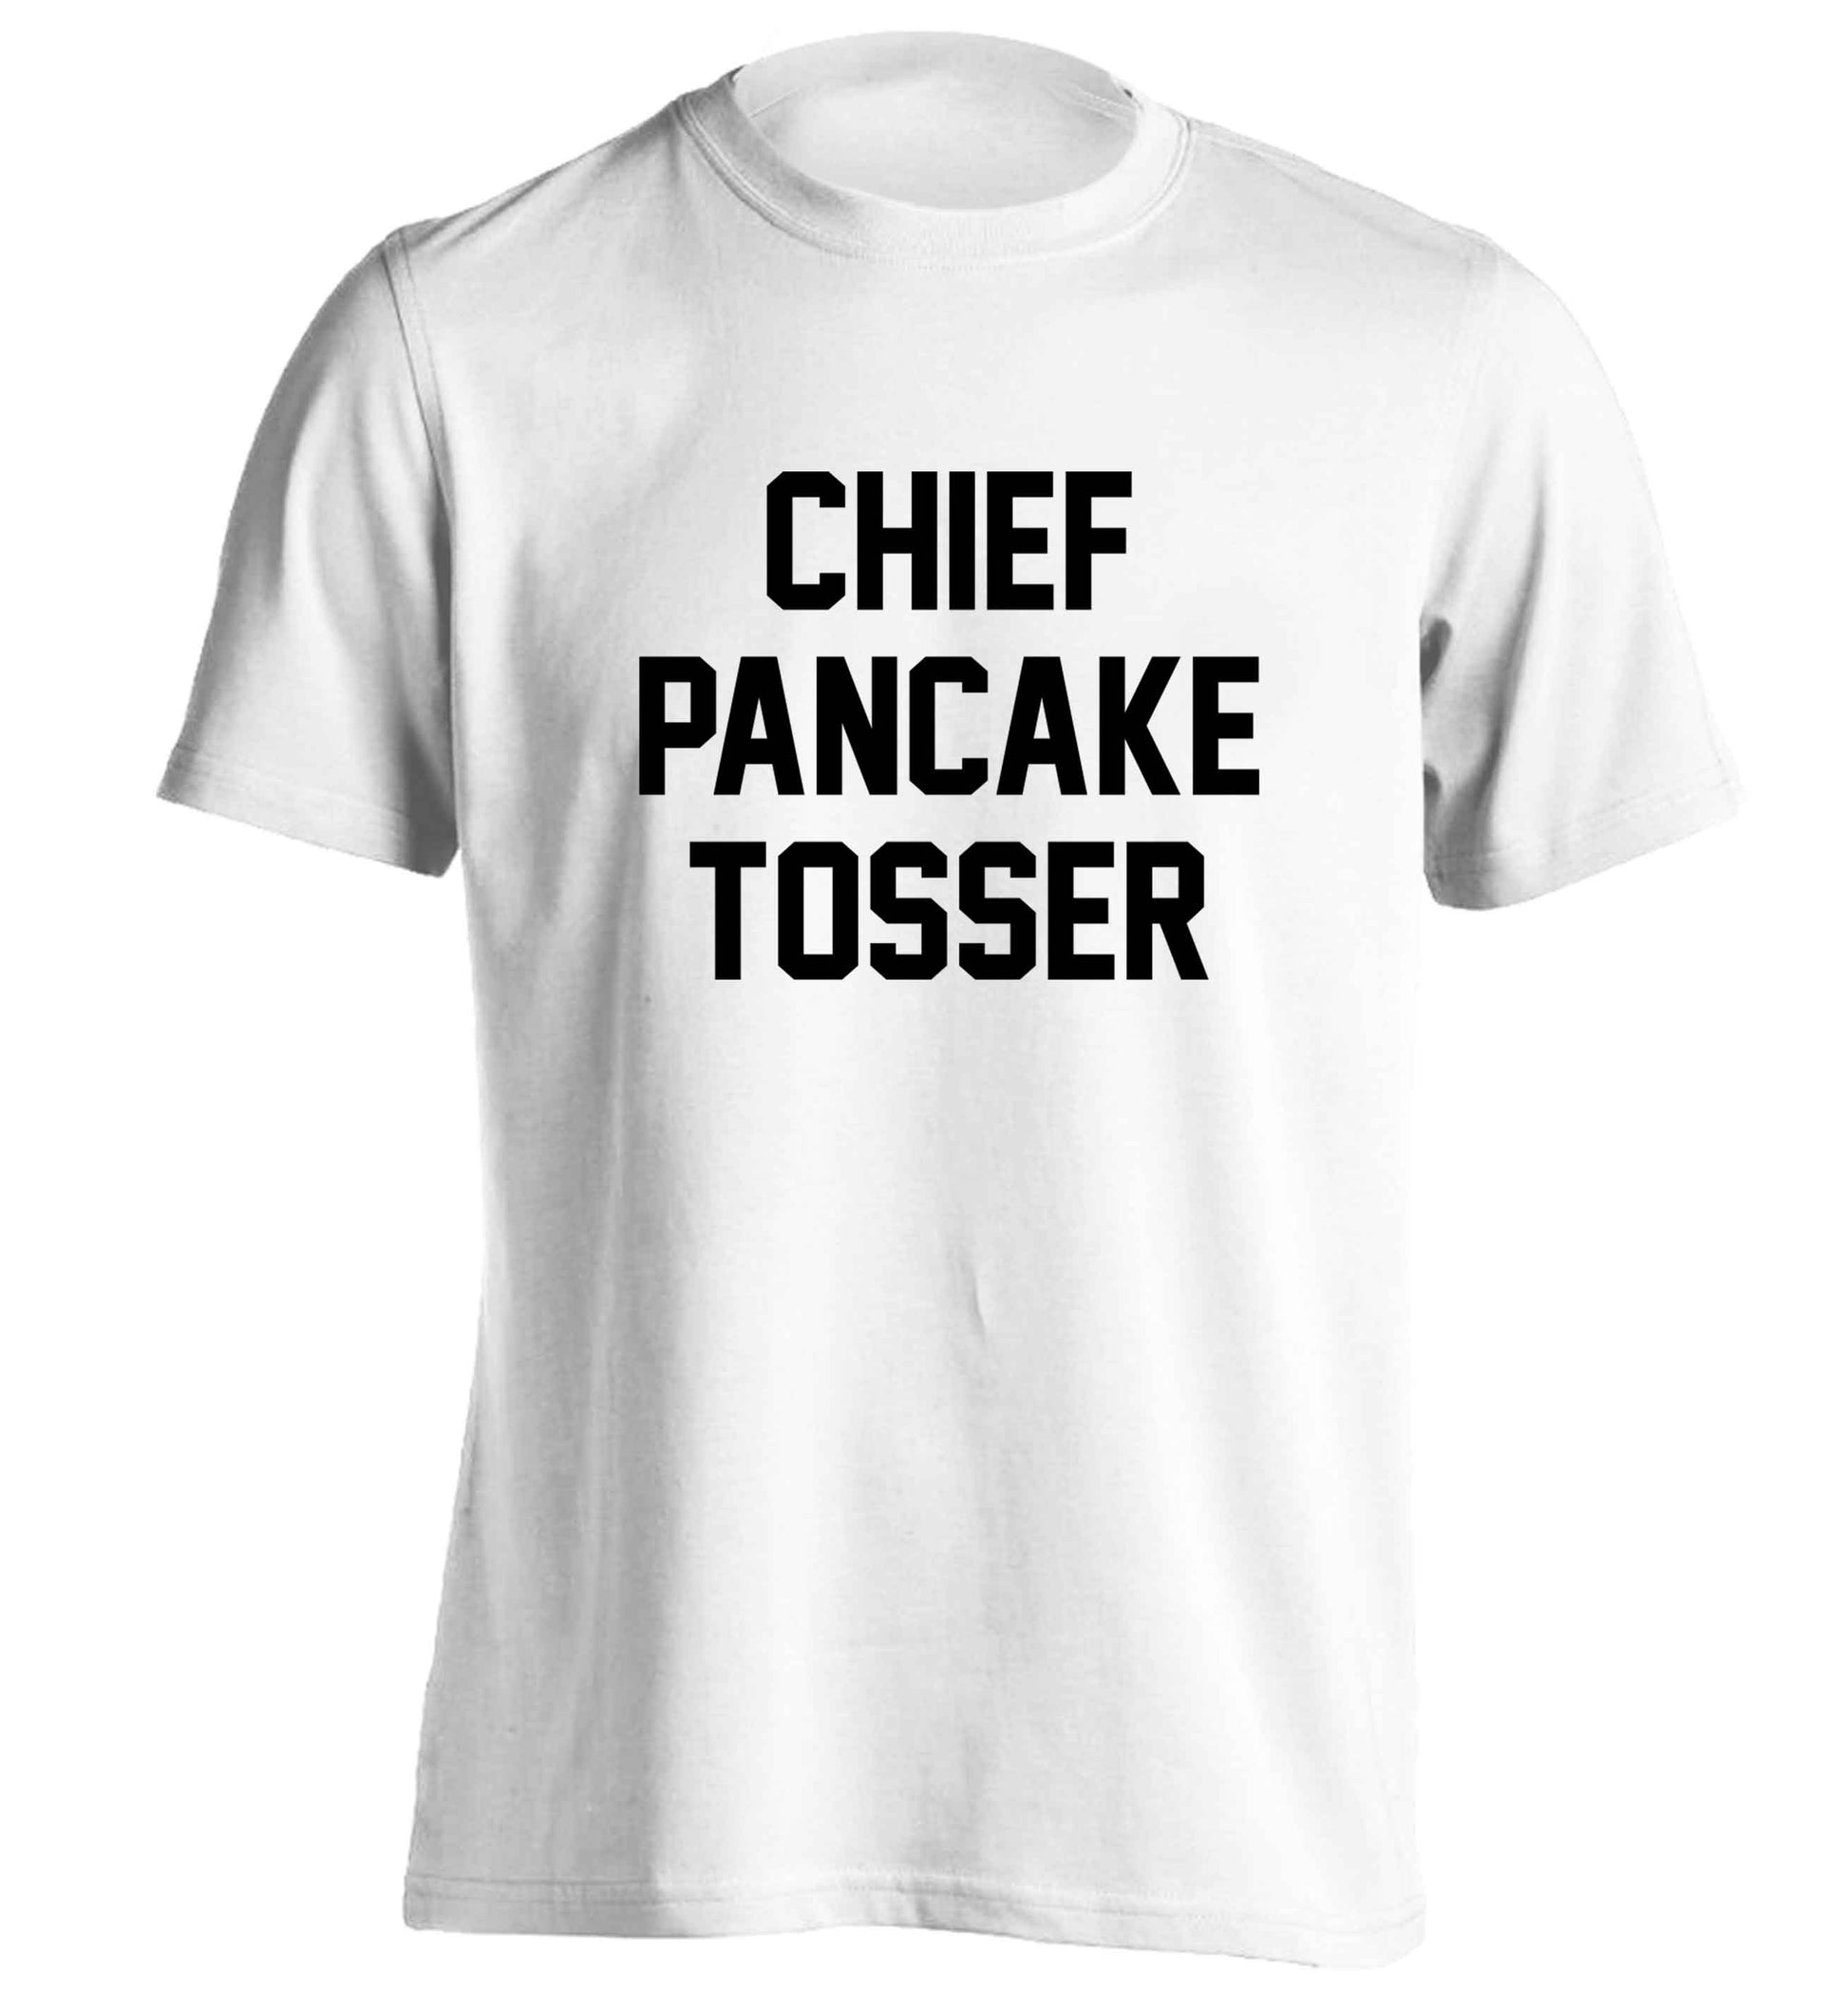 Chief pancake tosser adults unisex white Tshirt 2XL